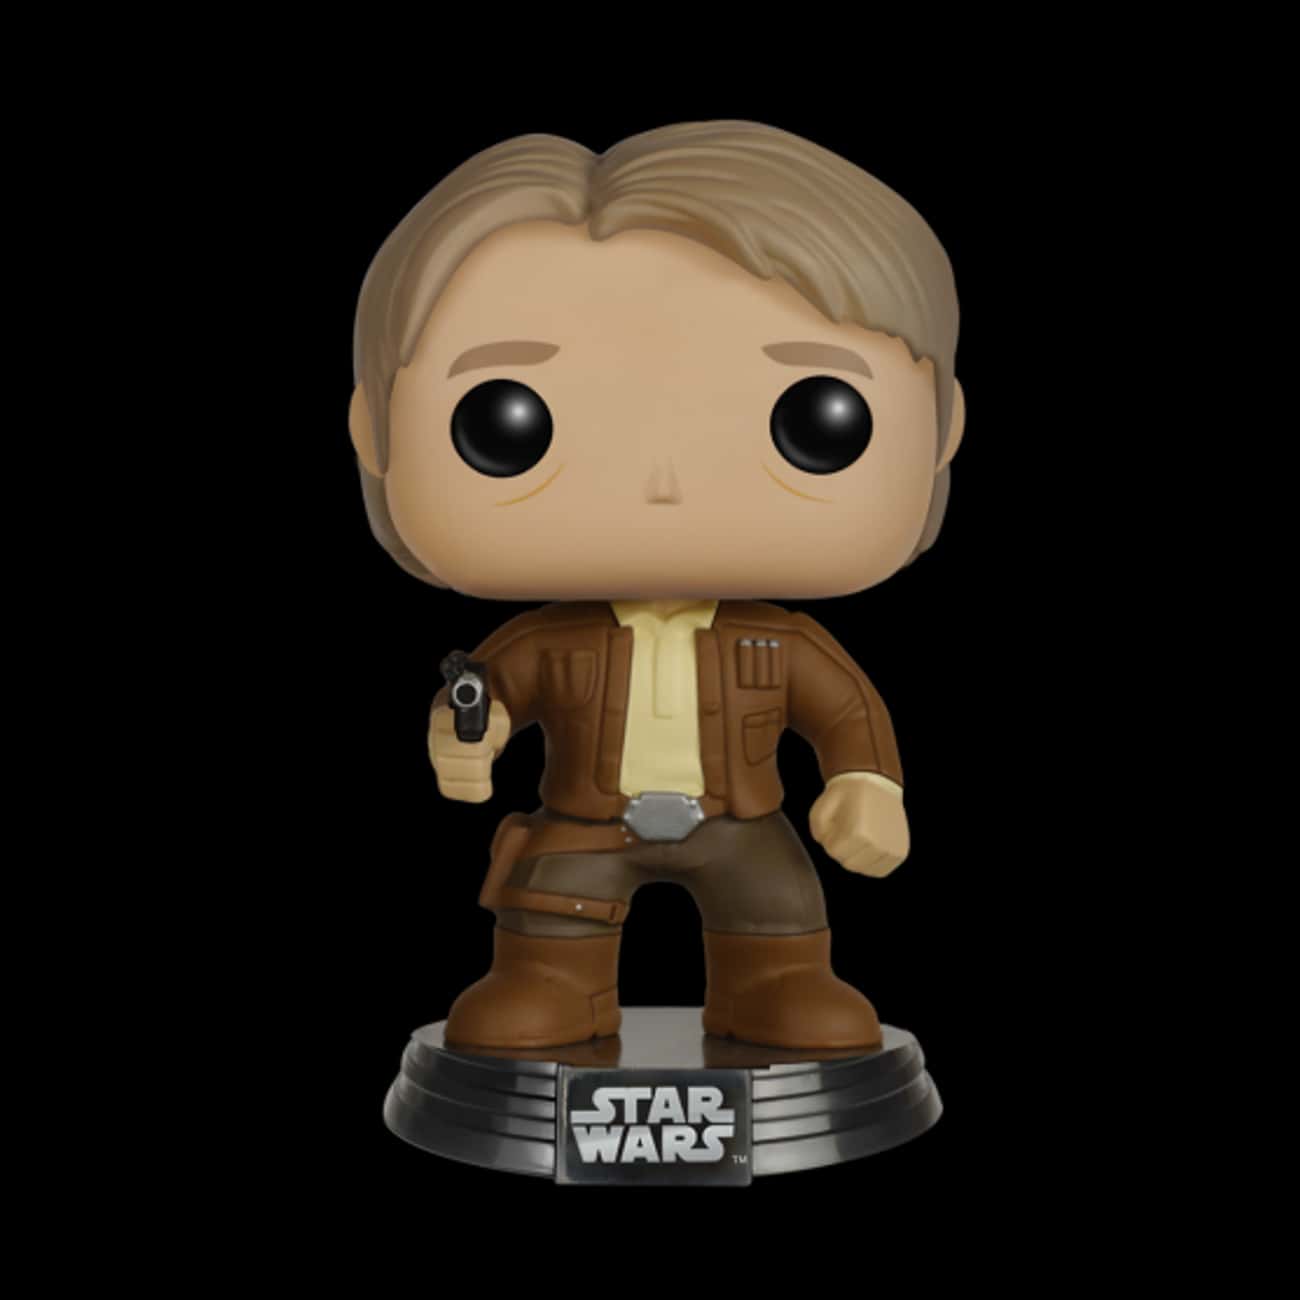 Pop Star Wars: The Force Awakens - Han Solo